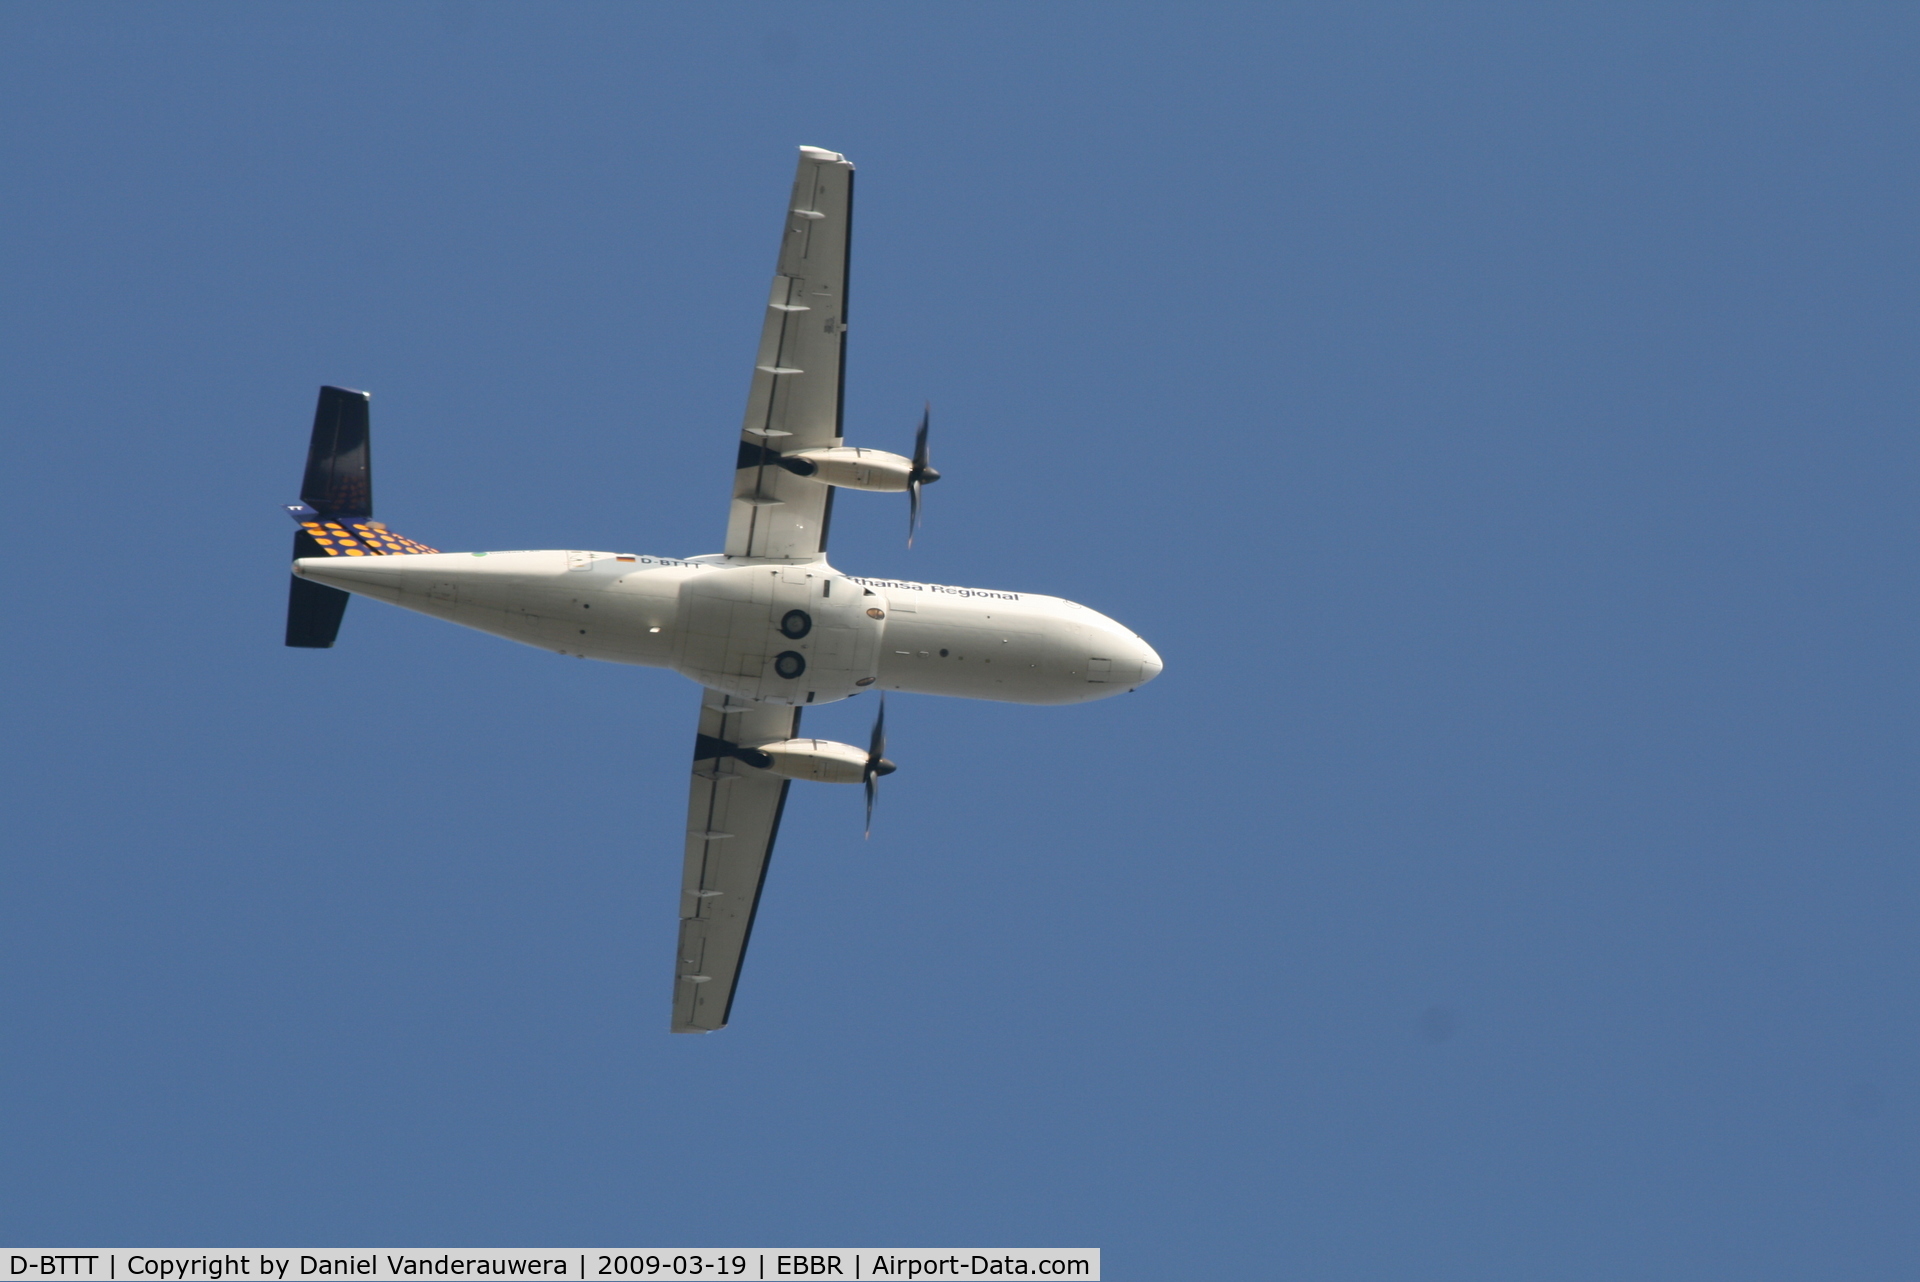 D-BTTT, 1999 ATR 42-500 C/N 603, Flight LH4657 is taking off from RWY 07R